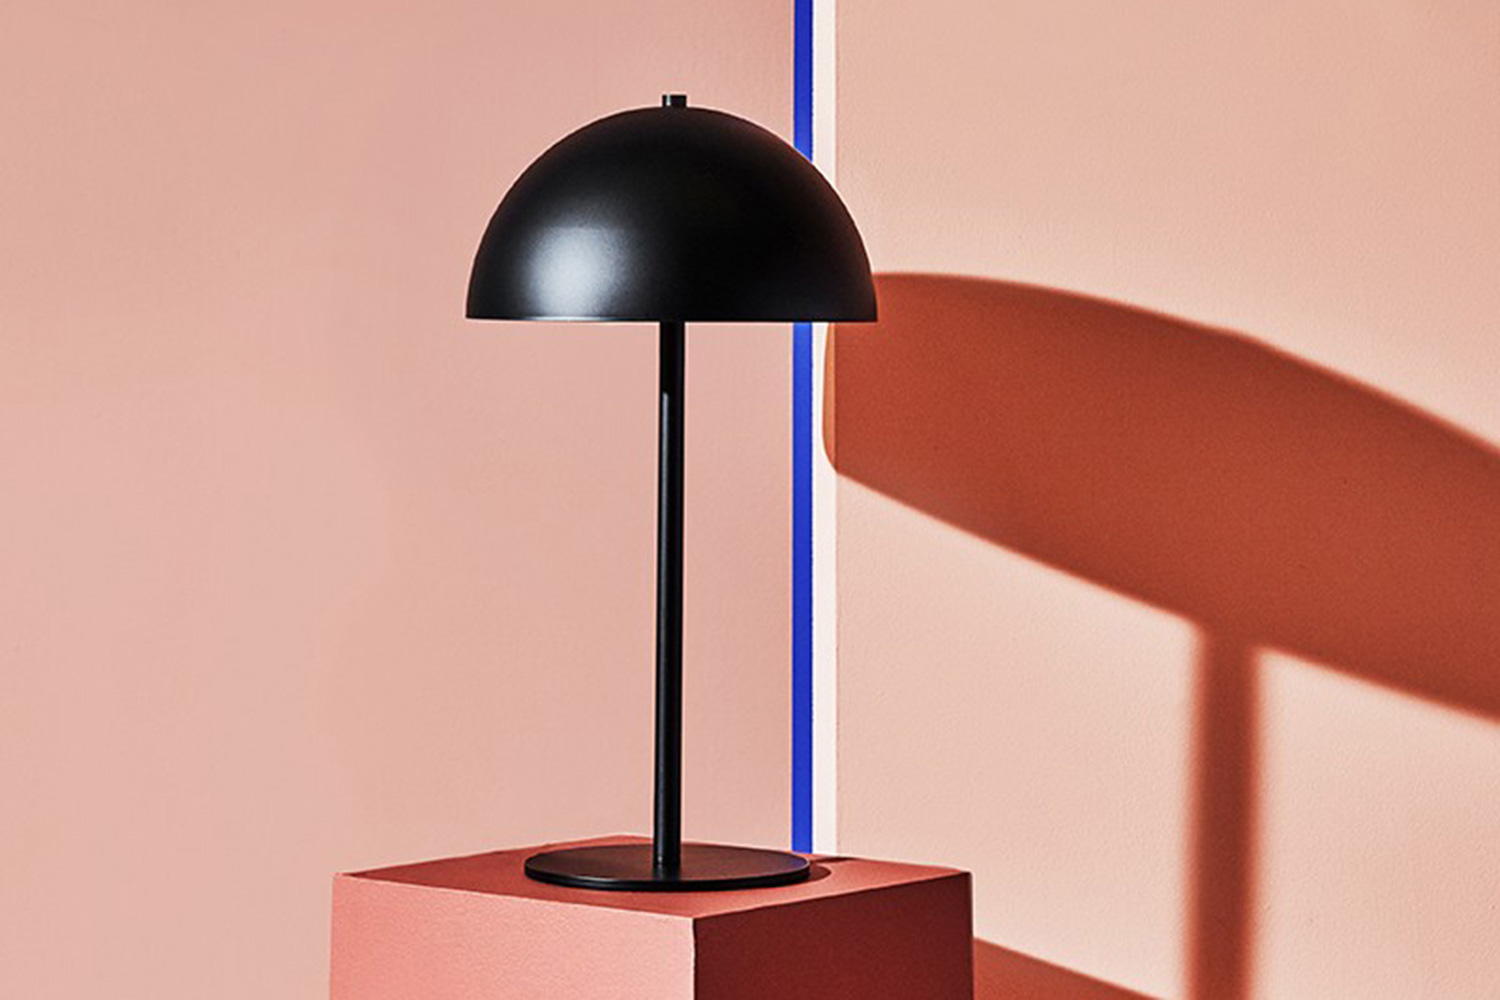 Nuevo™ Rocio Table Light - Matte Black
- Minimalist stylish black office lamp